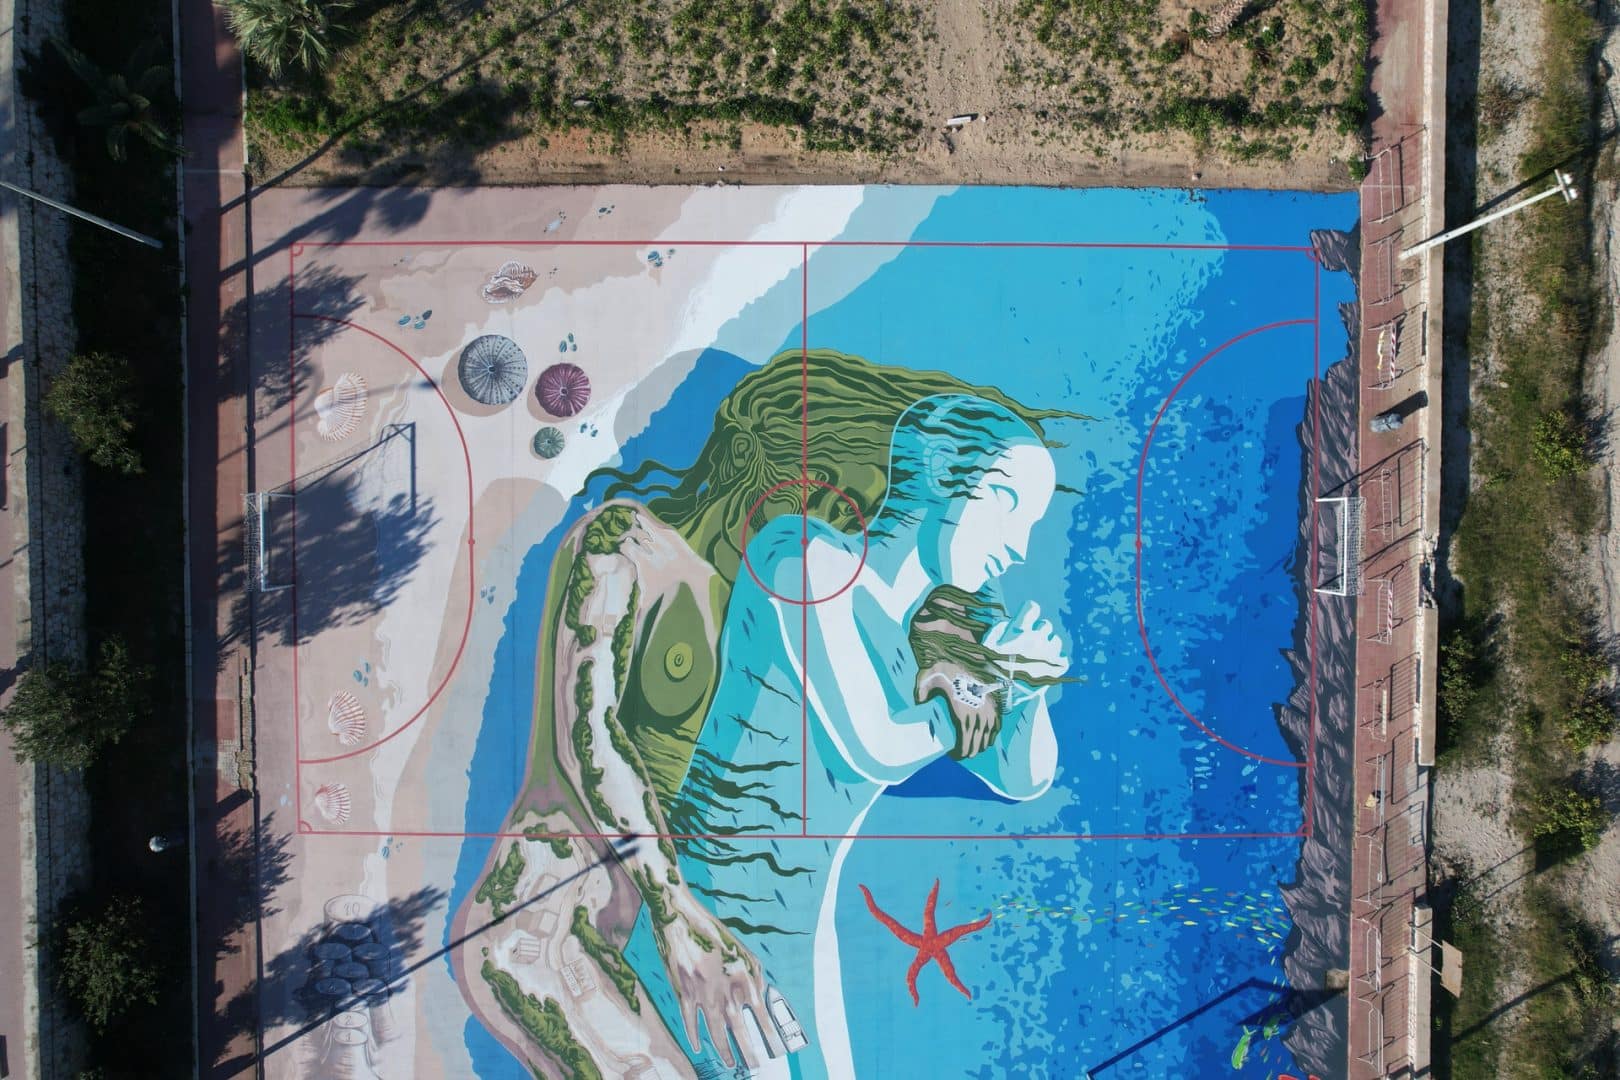 Ale-Senso-Quiete-SAB-Project inmenso mural tierra ymar